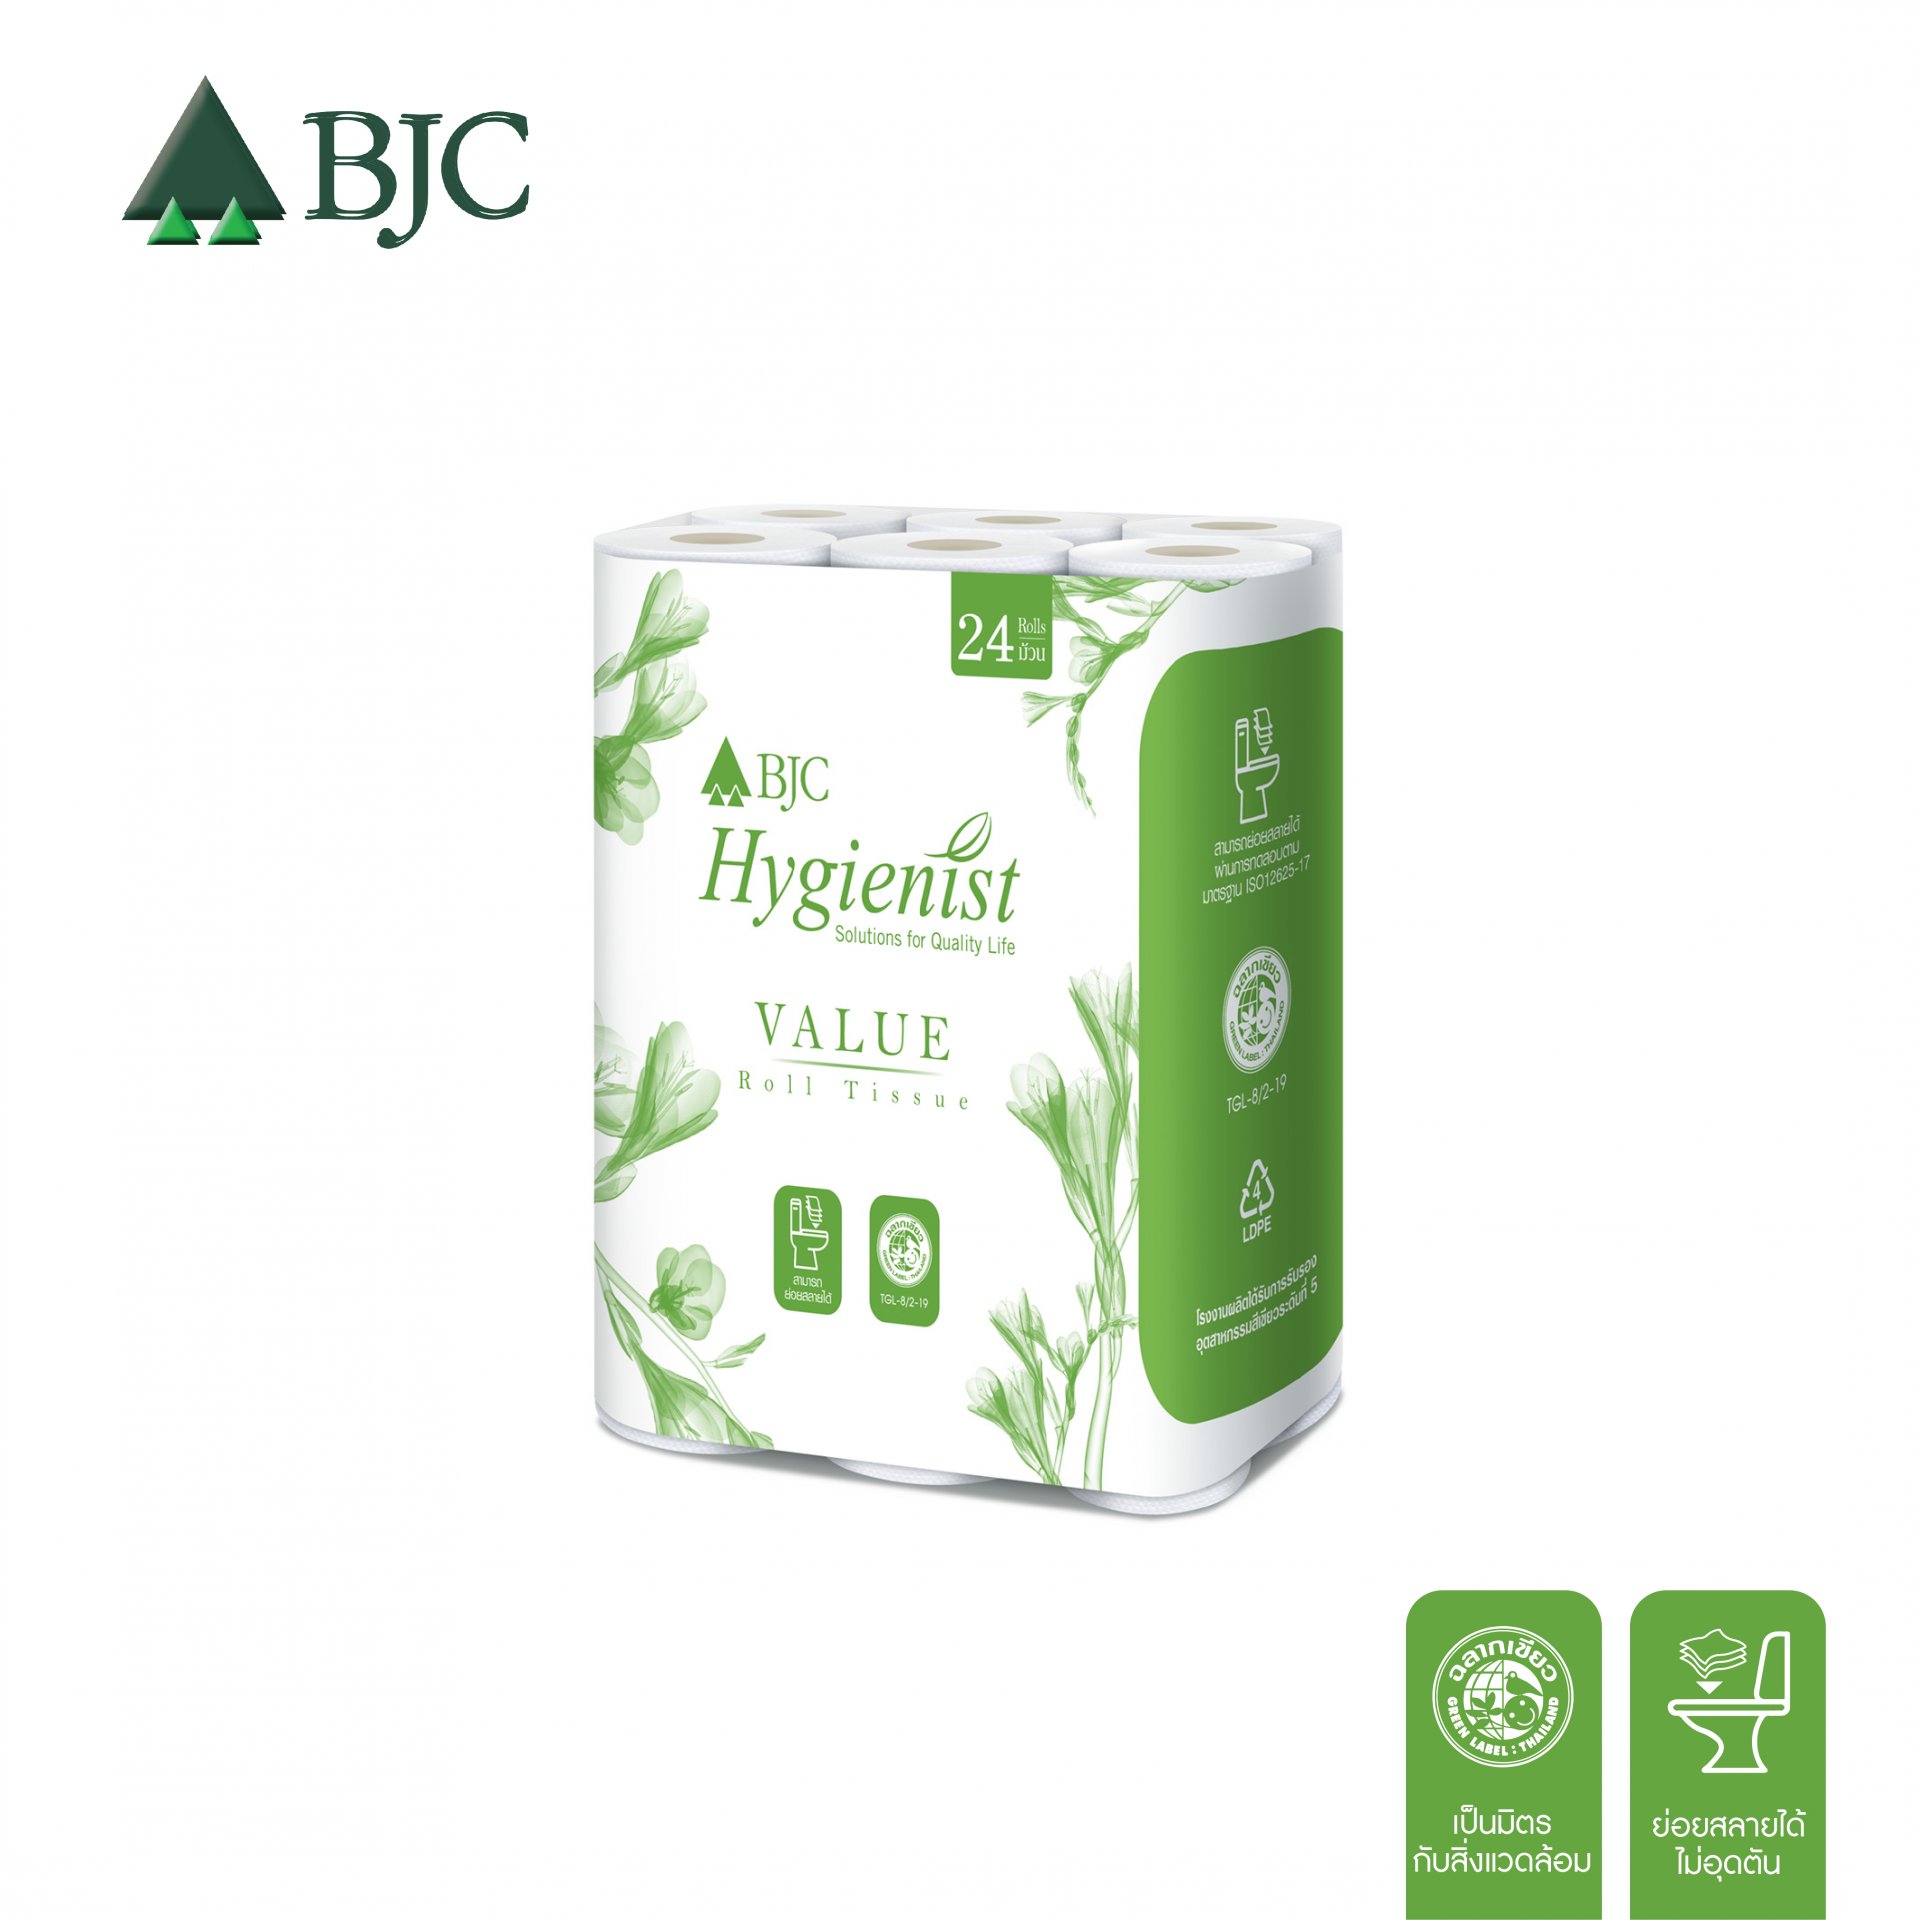 BJC Hygienist Value Roll Tissue 24"r